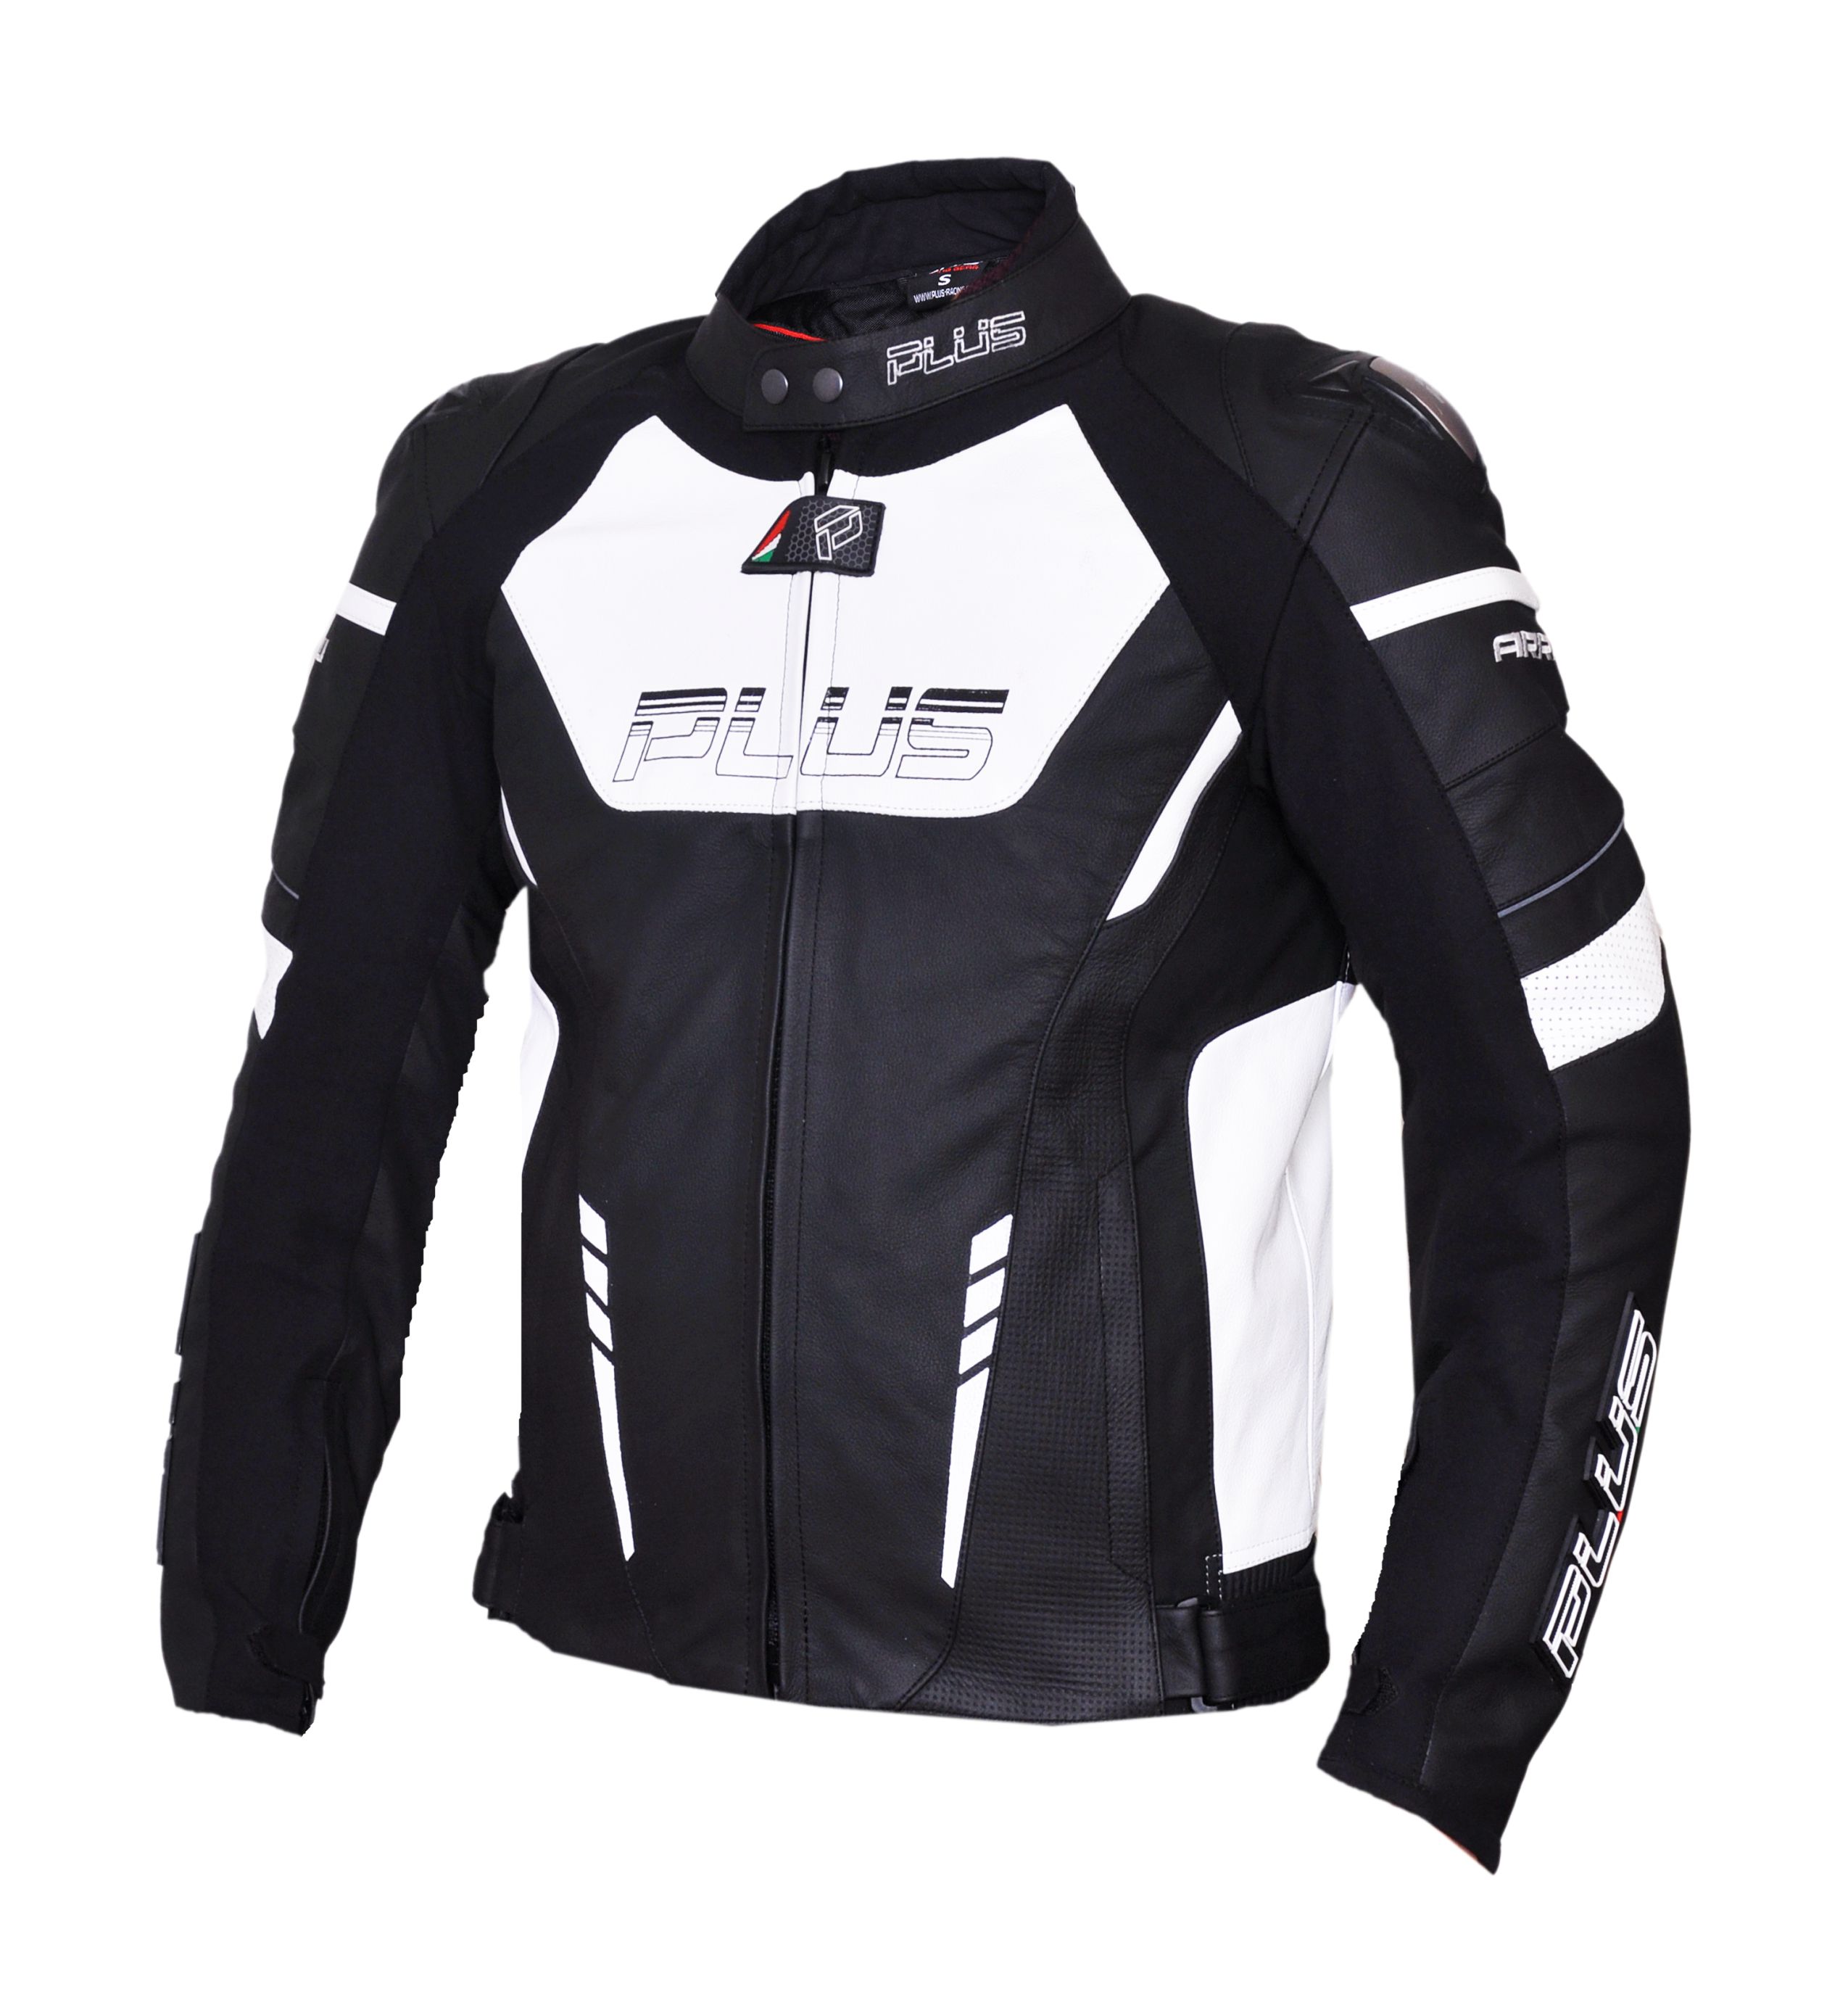 ARROW Leather Jacket | PLUS Racing Gear